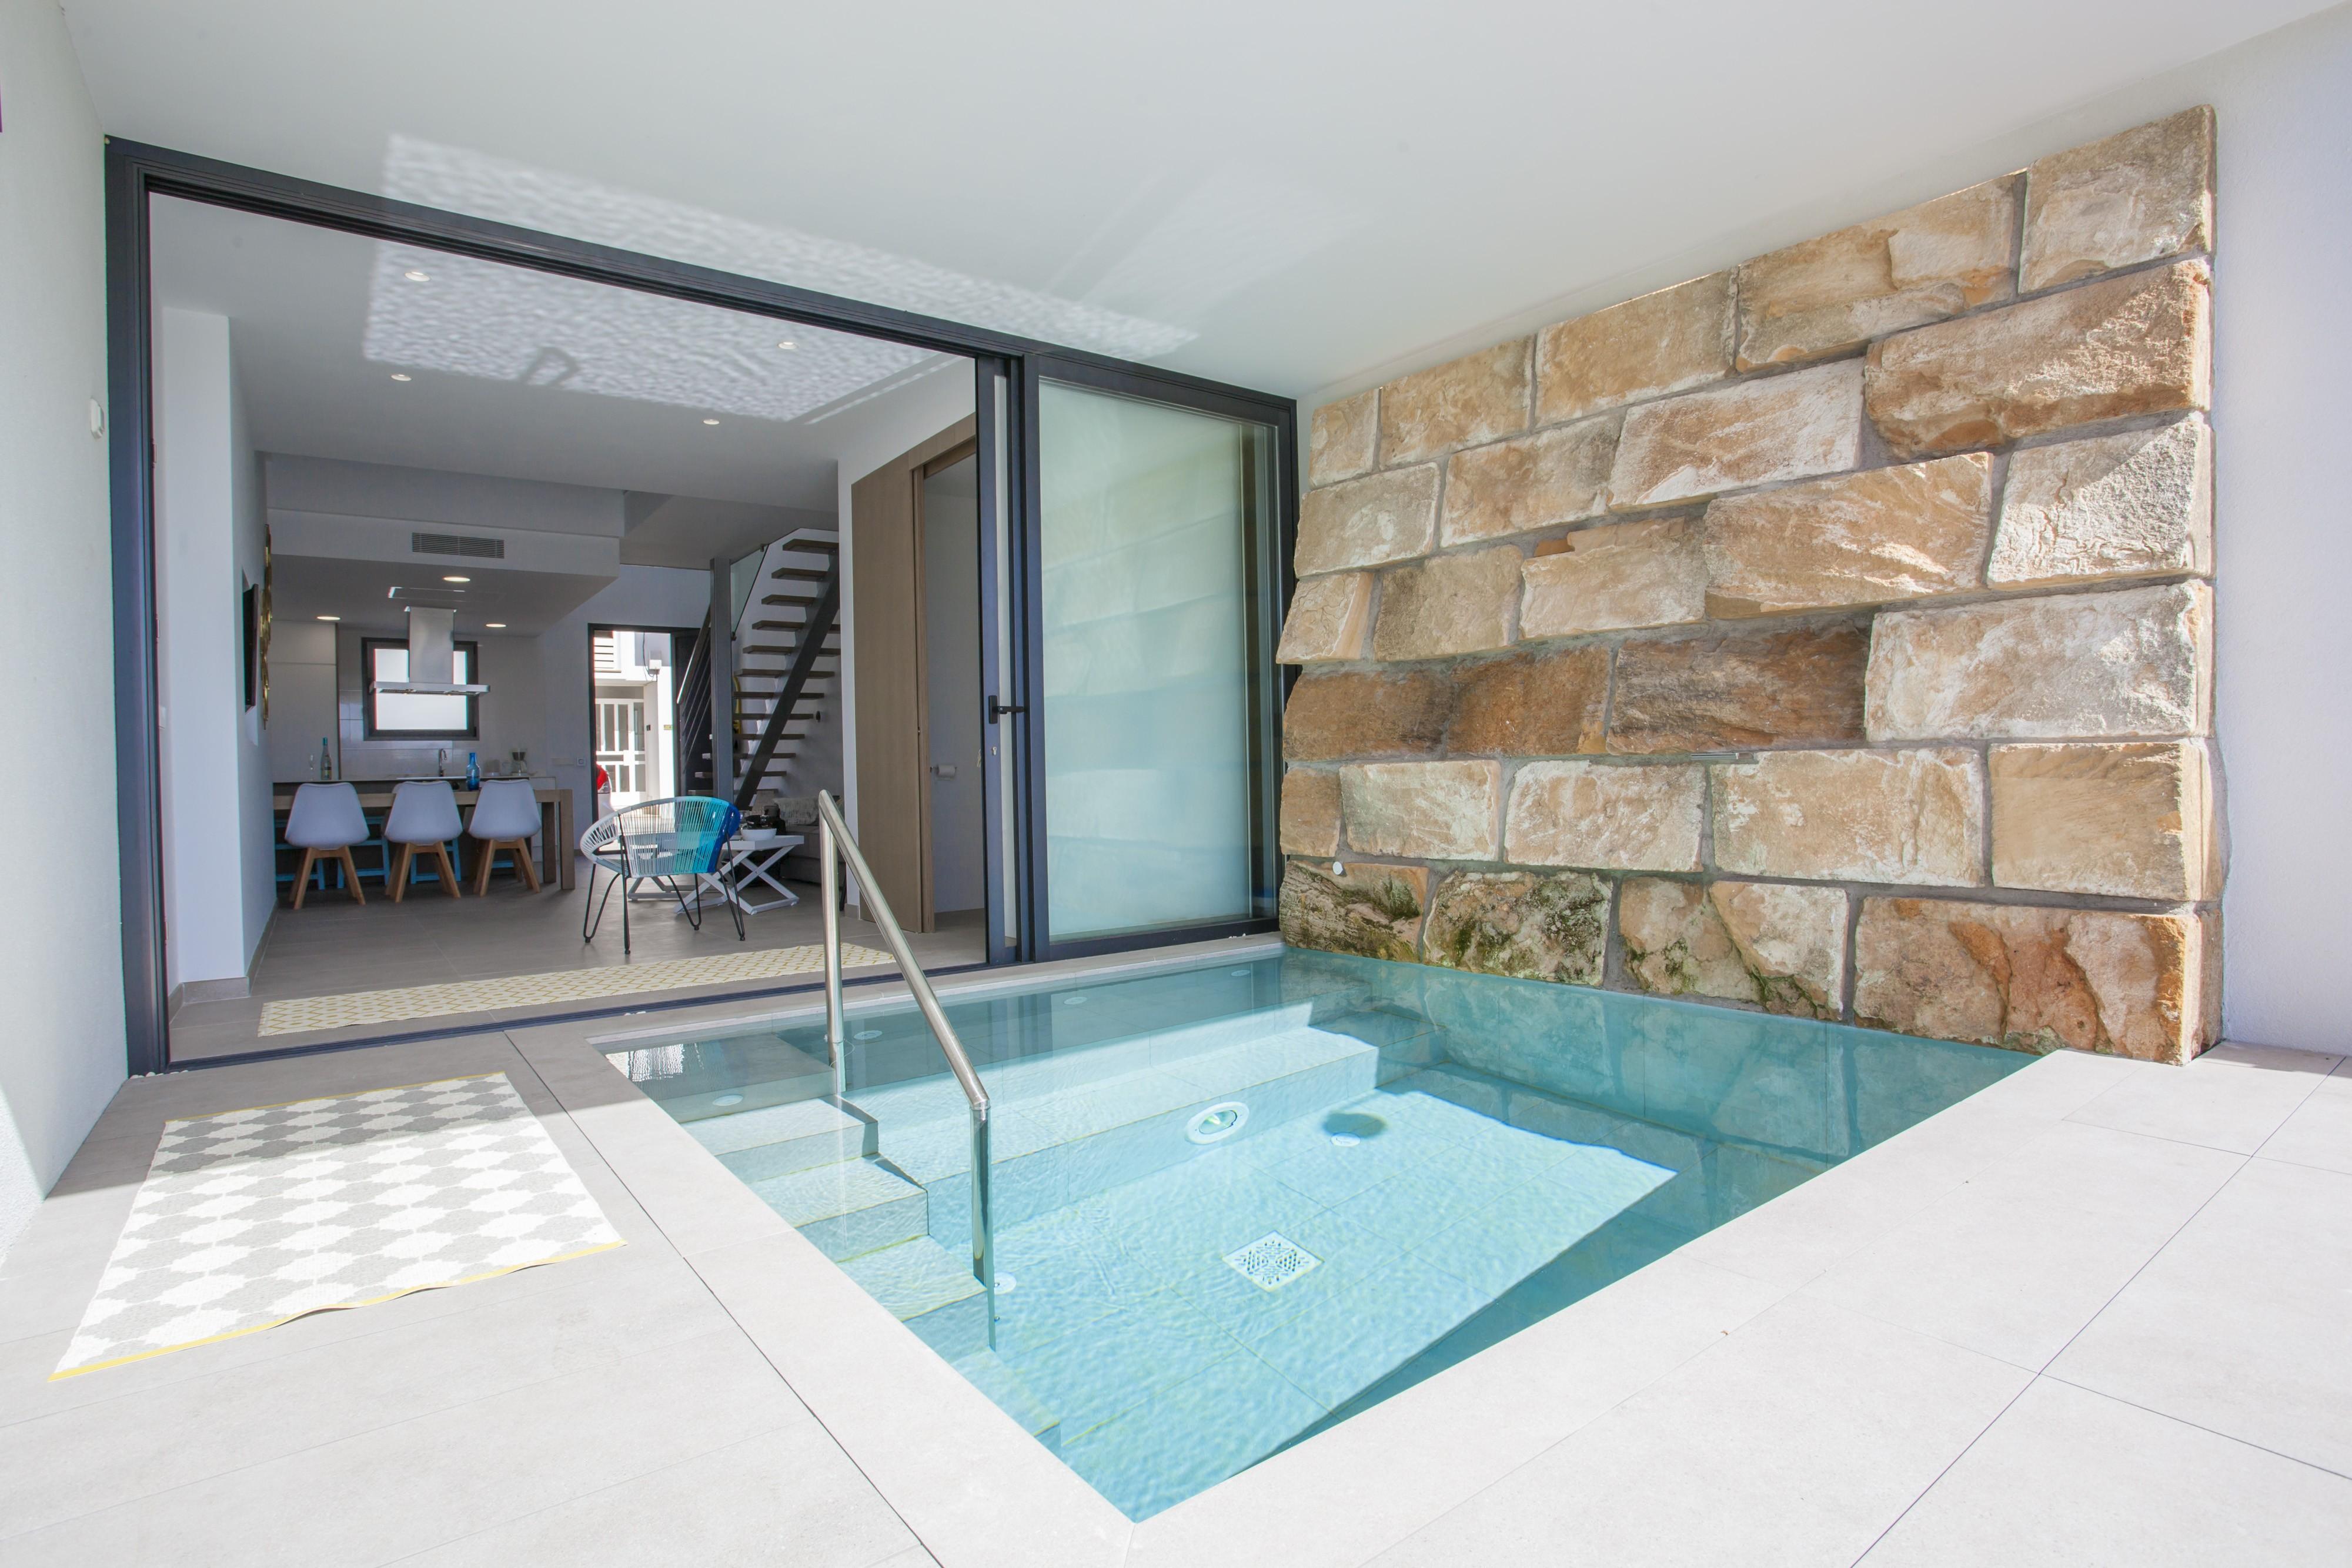 Property Image 1 - S’AIGUA 5 - Villa with private pool in s’Illot. Free WiFi